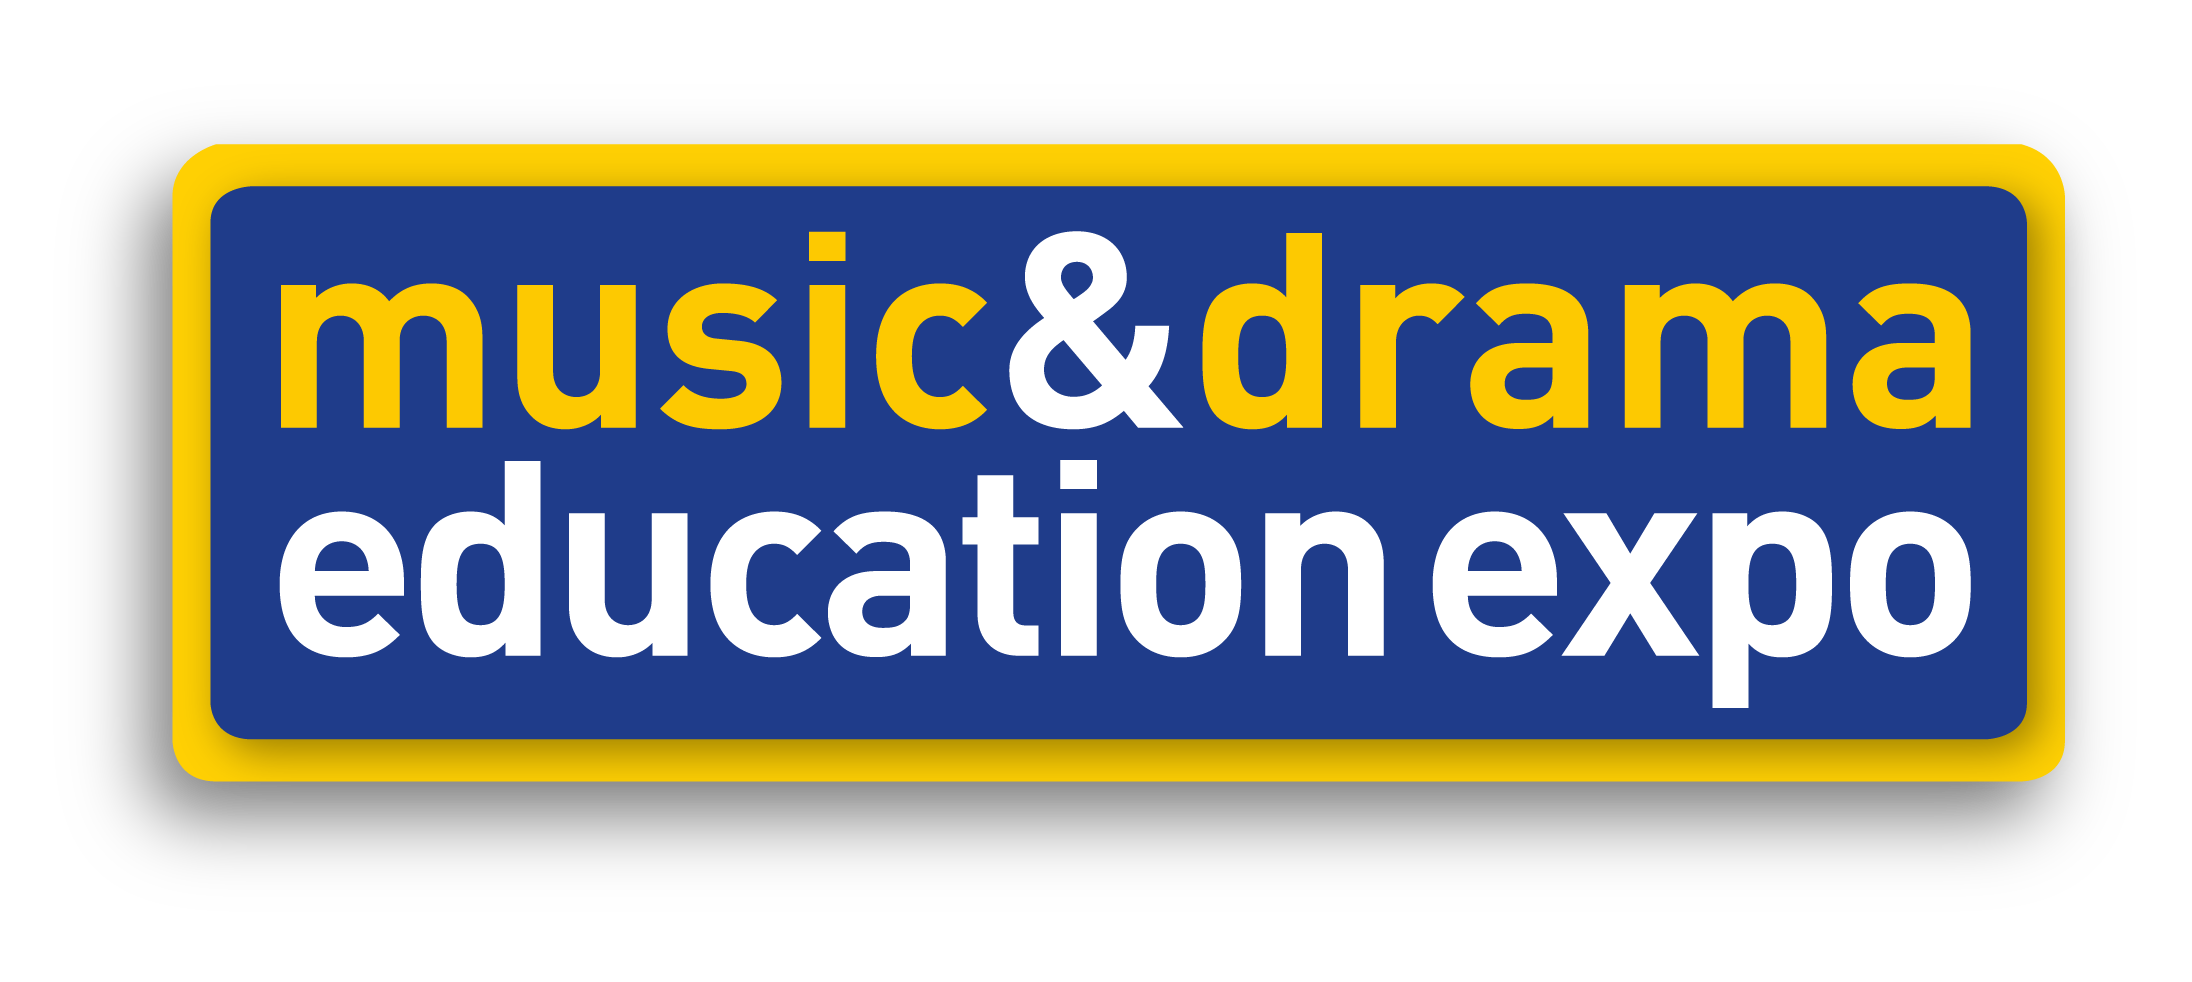 music & drama education expo